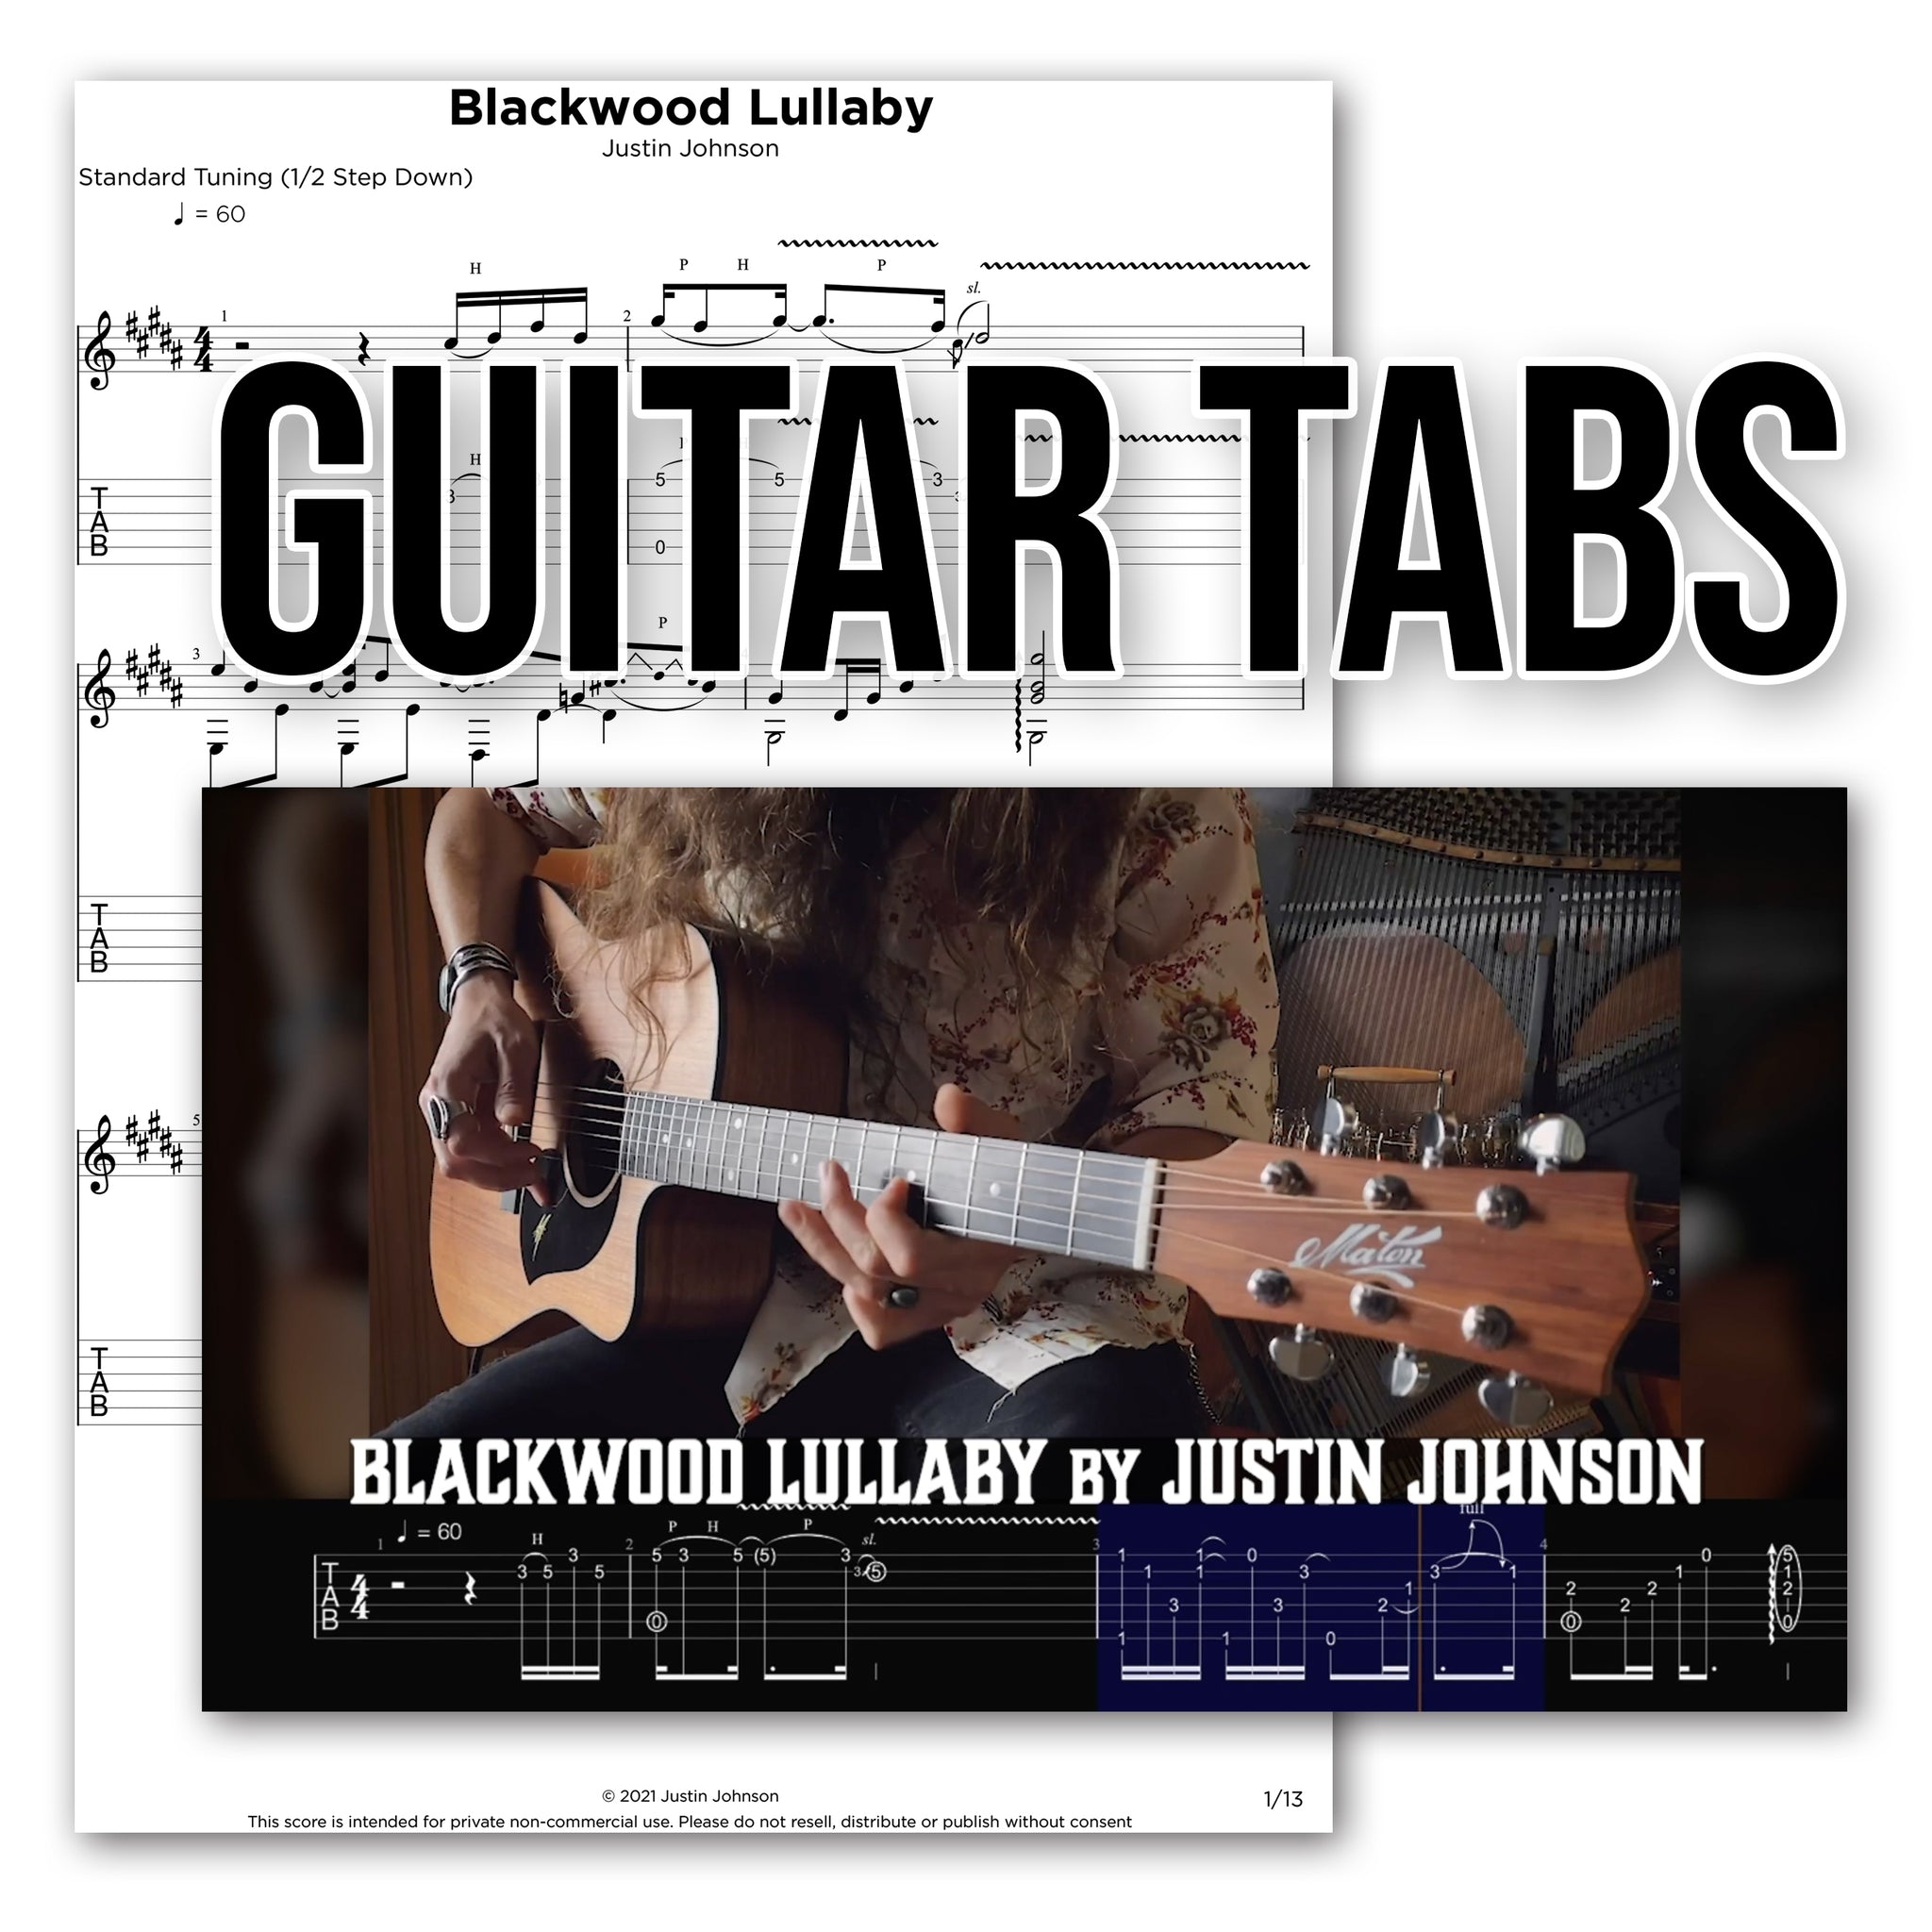 GUITAR TABS - "Blackwood Lullaby"